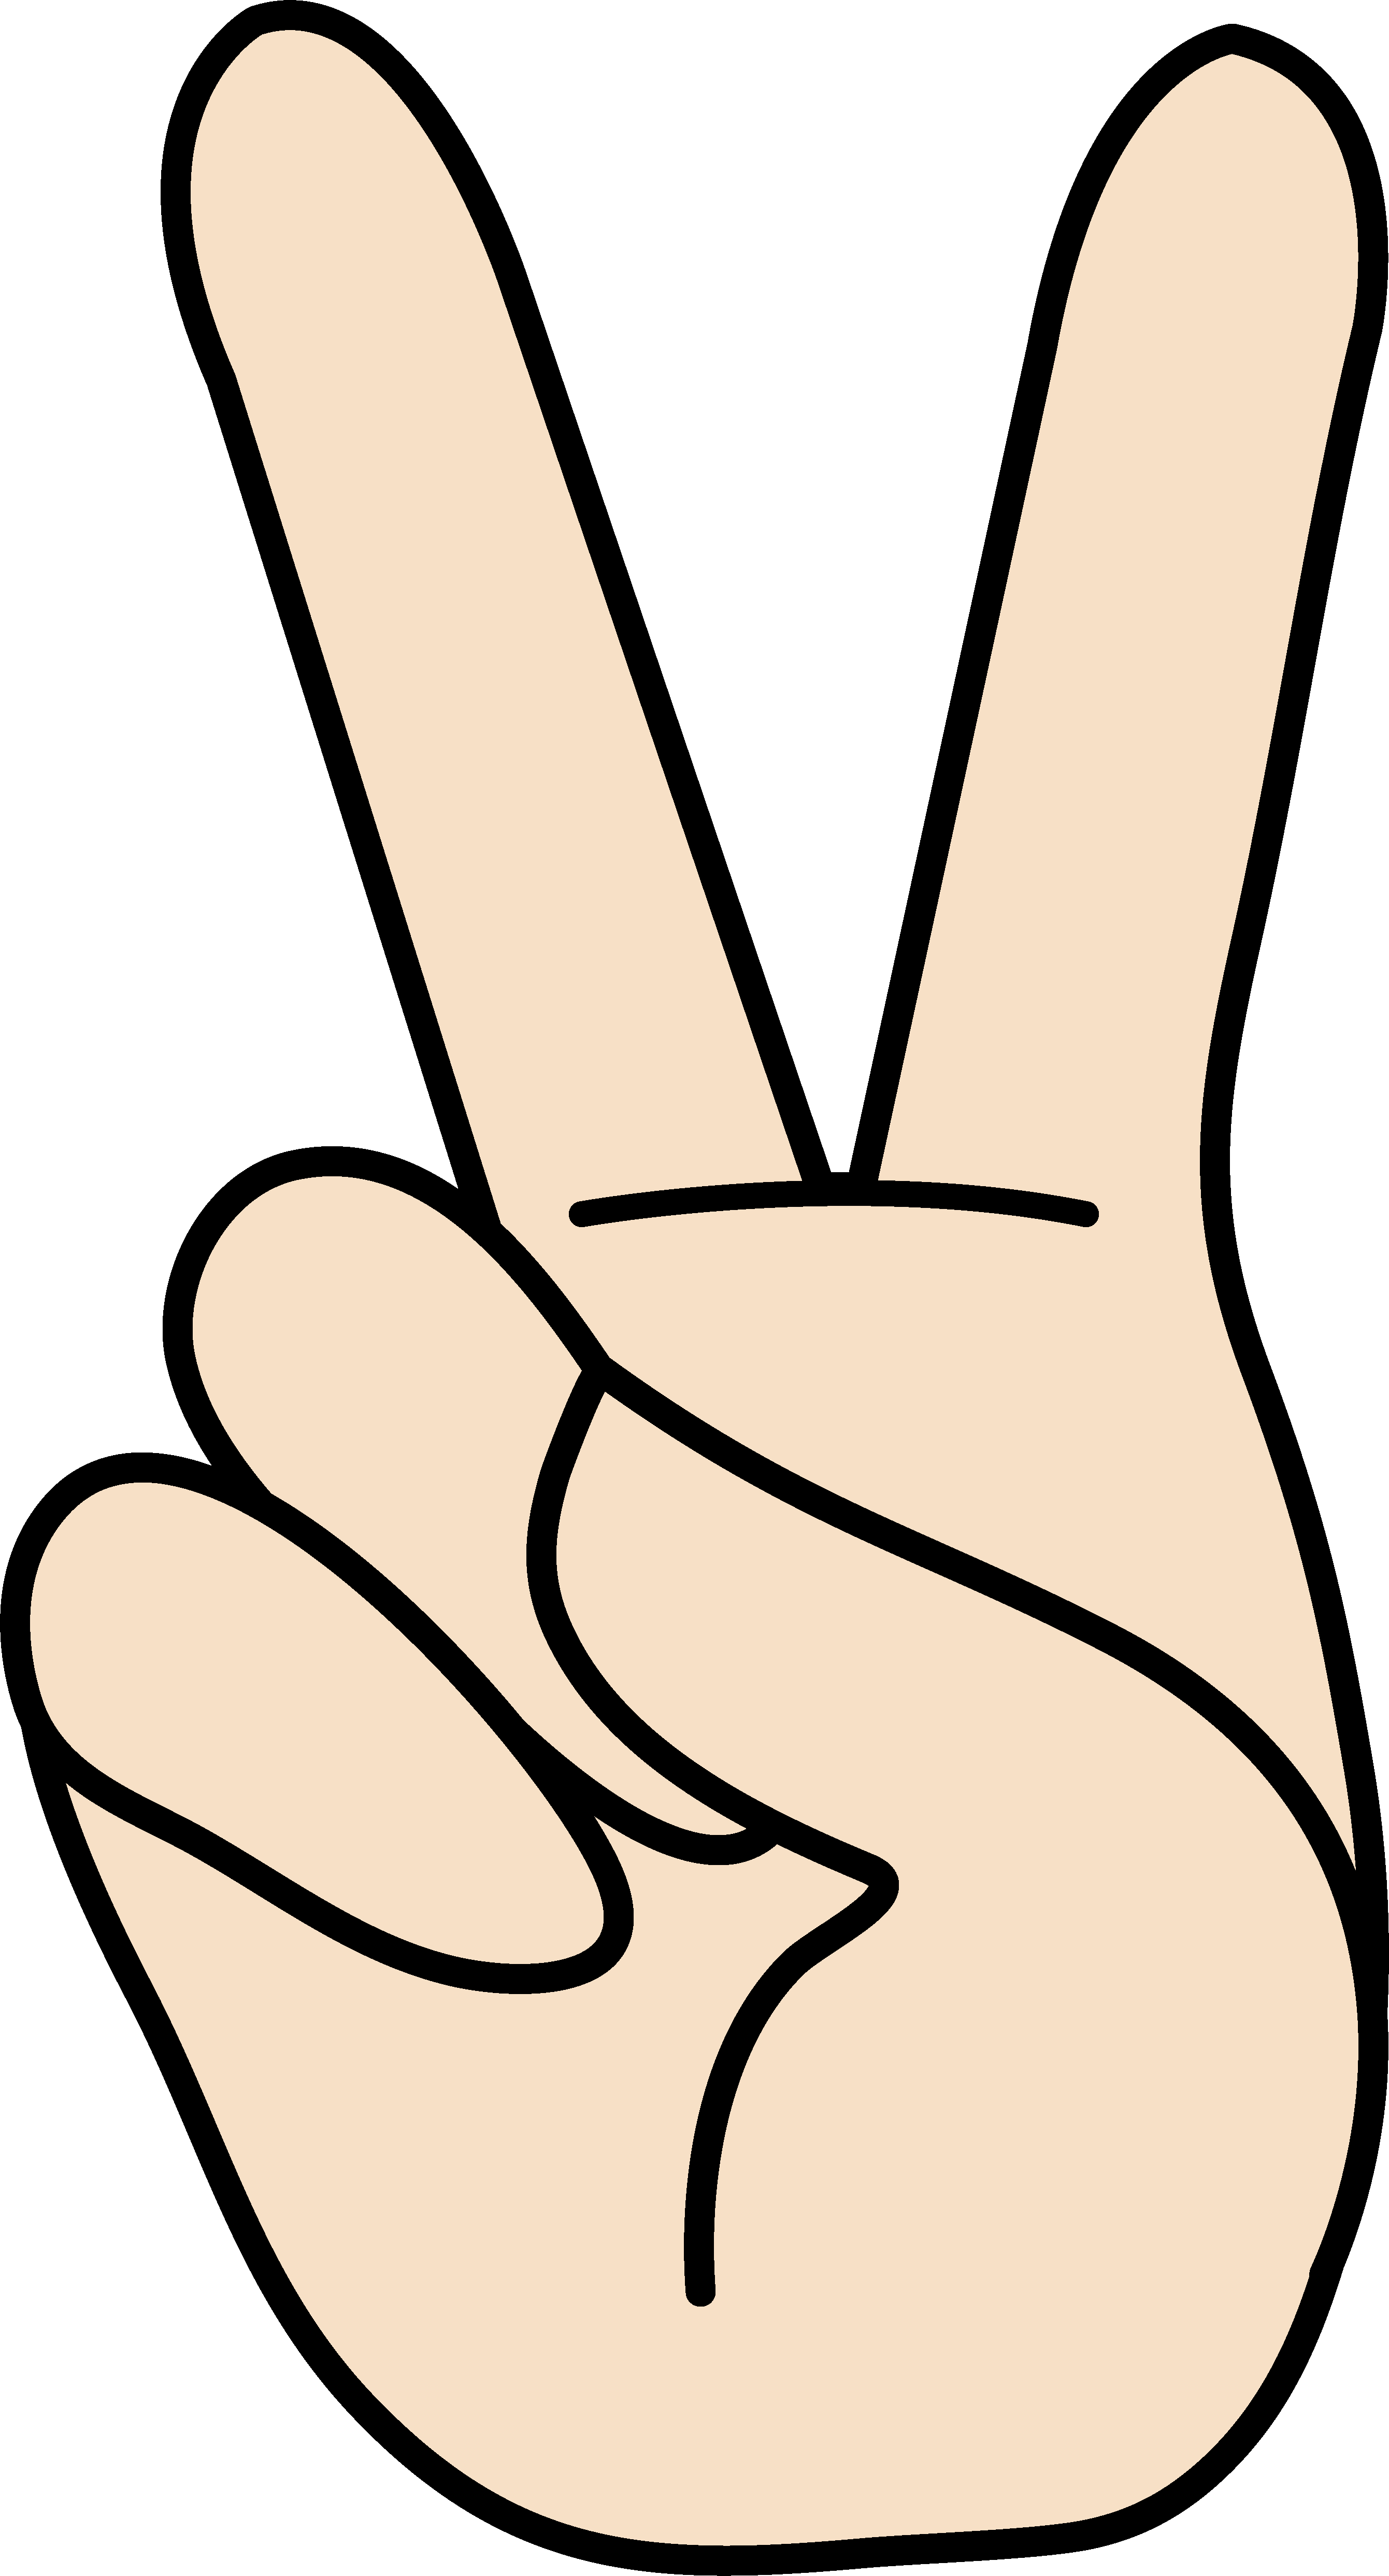 Cartoon Peace Sign Hand 